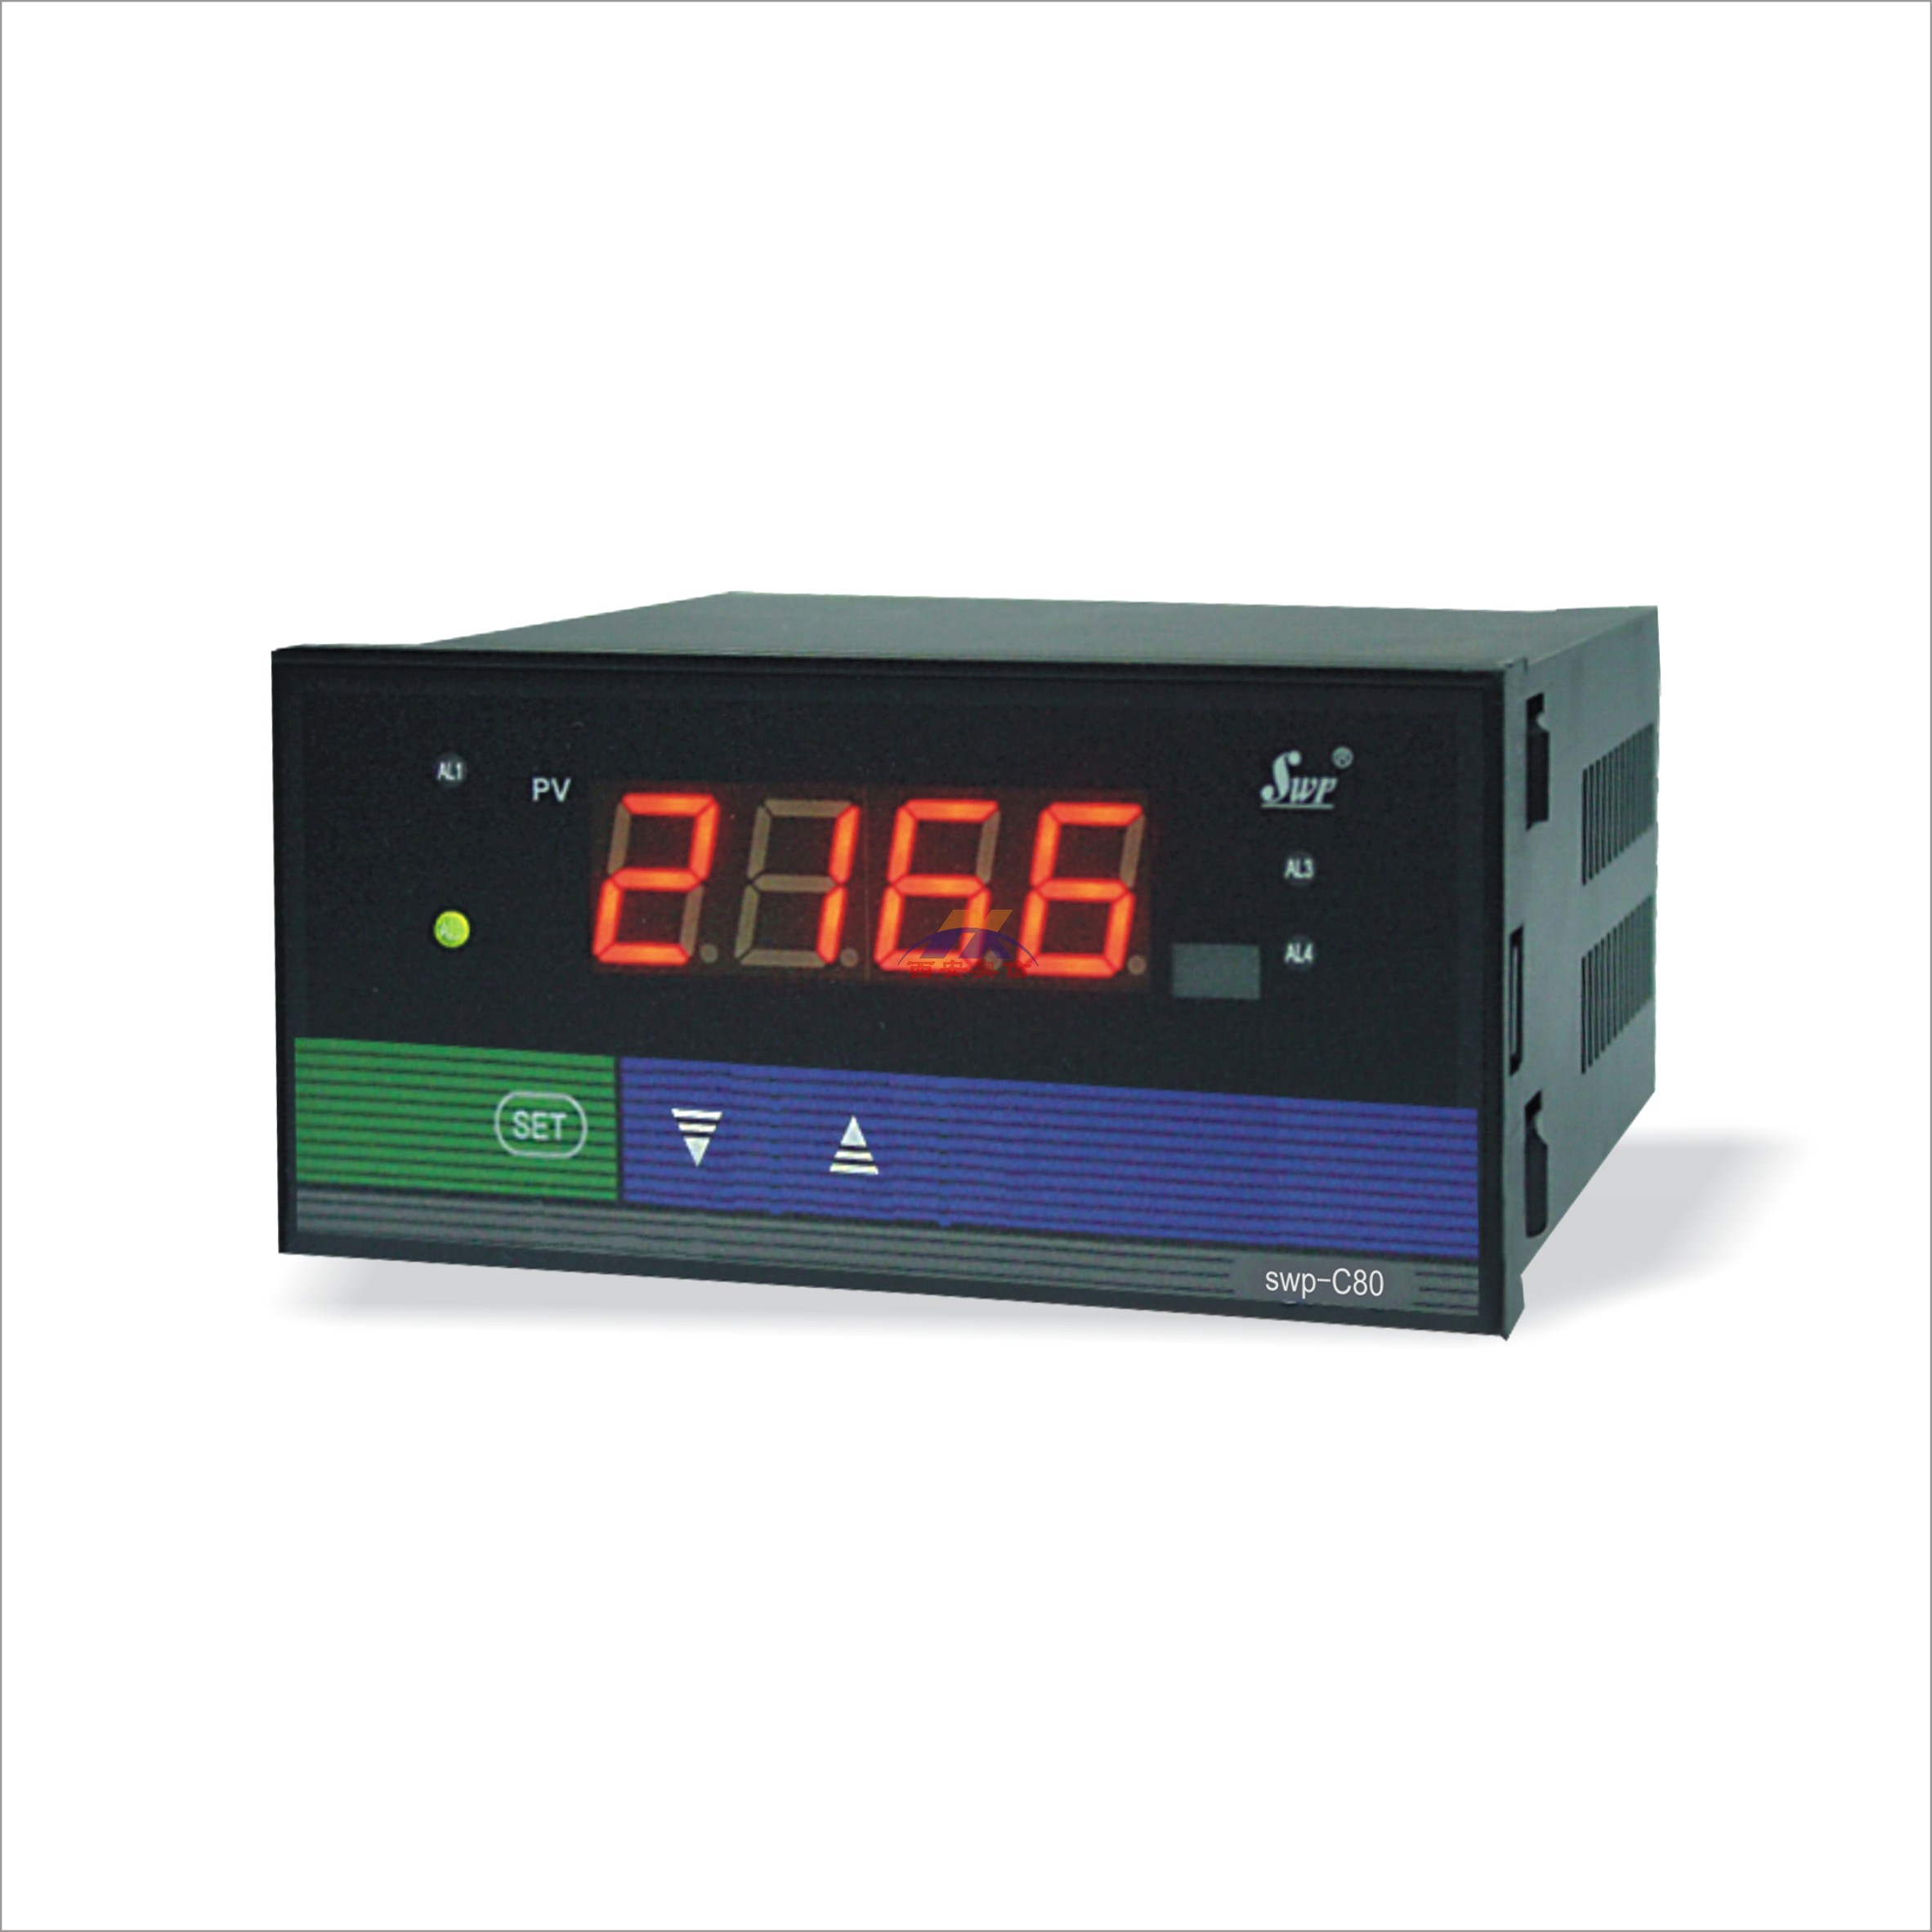  昌晖SWP-C403-01-23-HL温度数显仪SWP-LED单回路数显控制仪